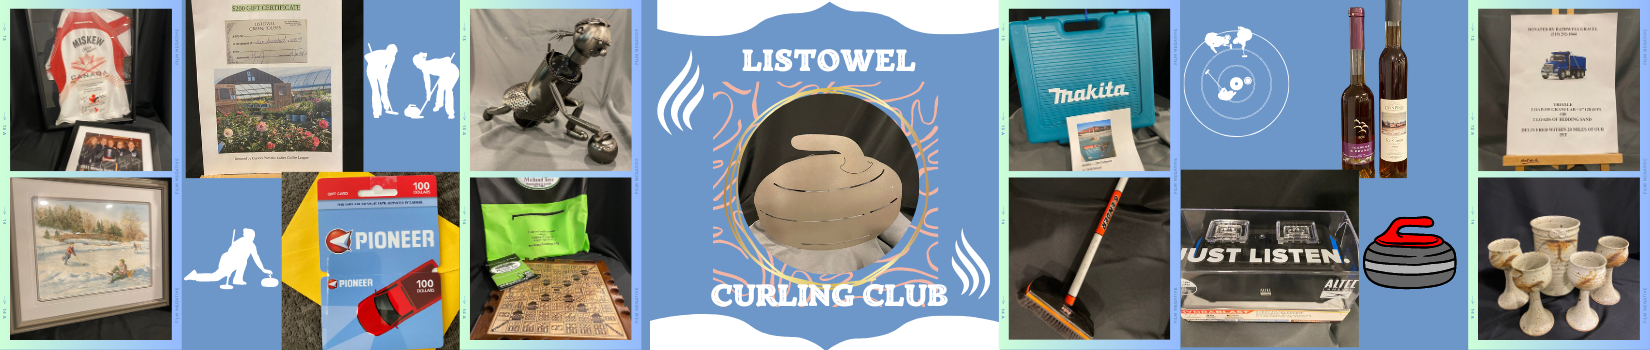 Listowel Curling Club